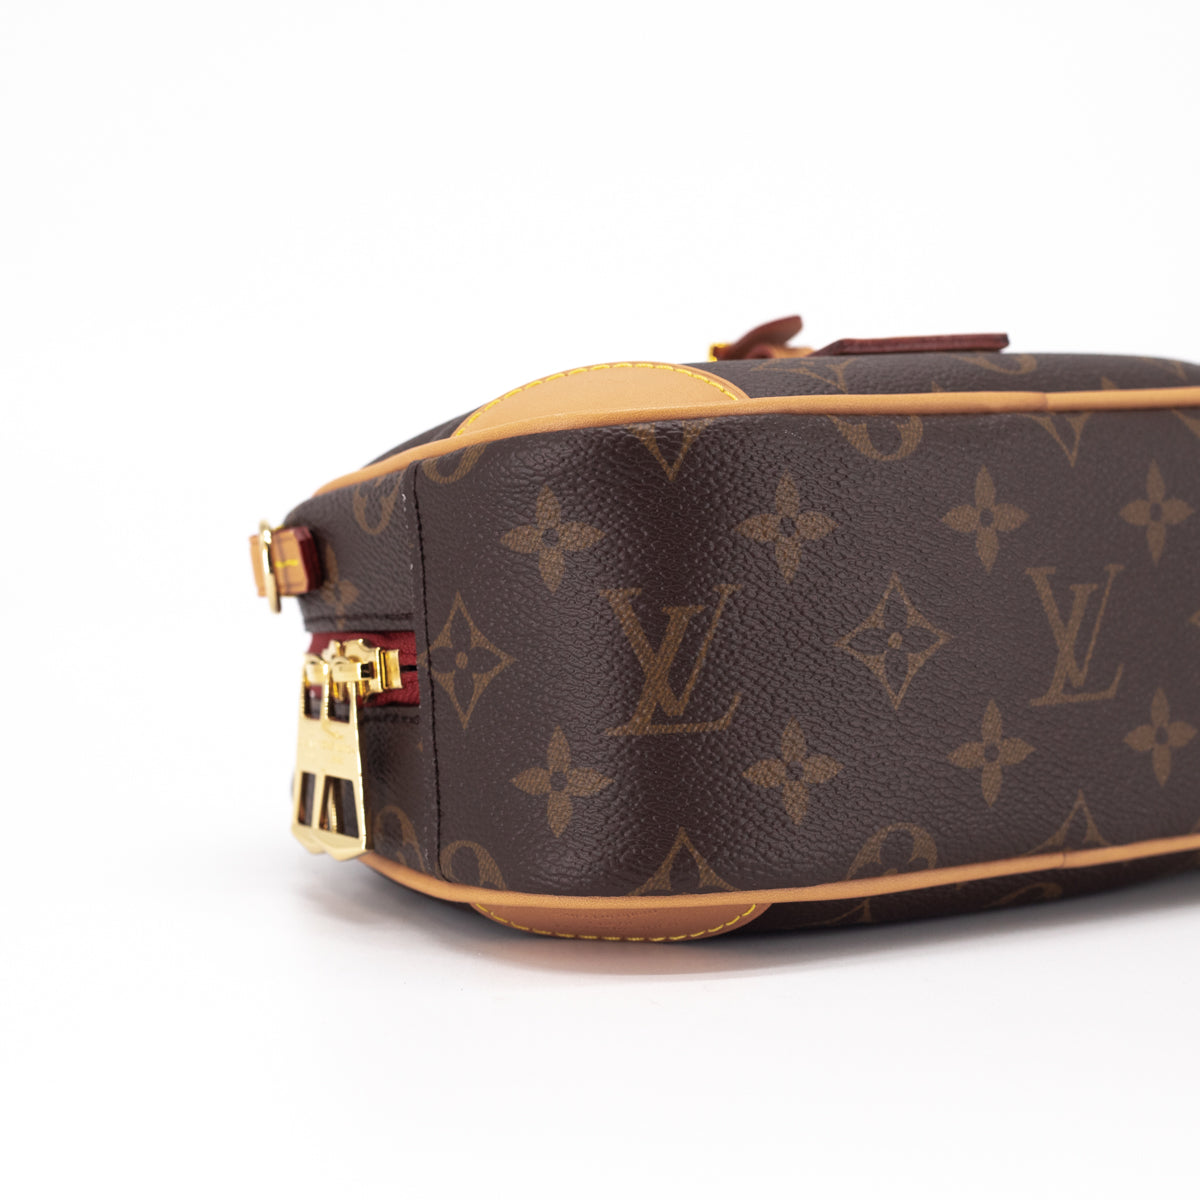 Louis Vuitton Deauville Mini Bag Review – The petite treasure - Unwrapped